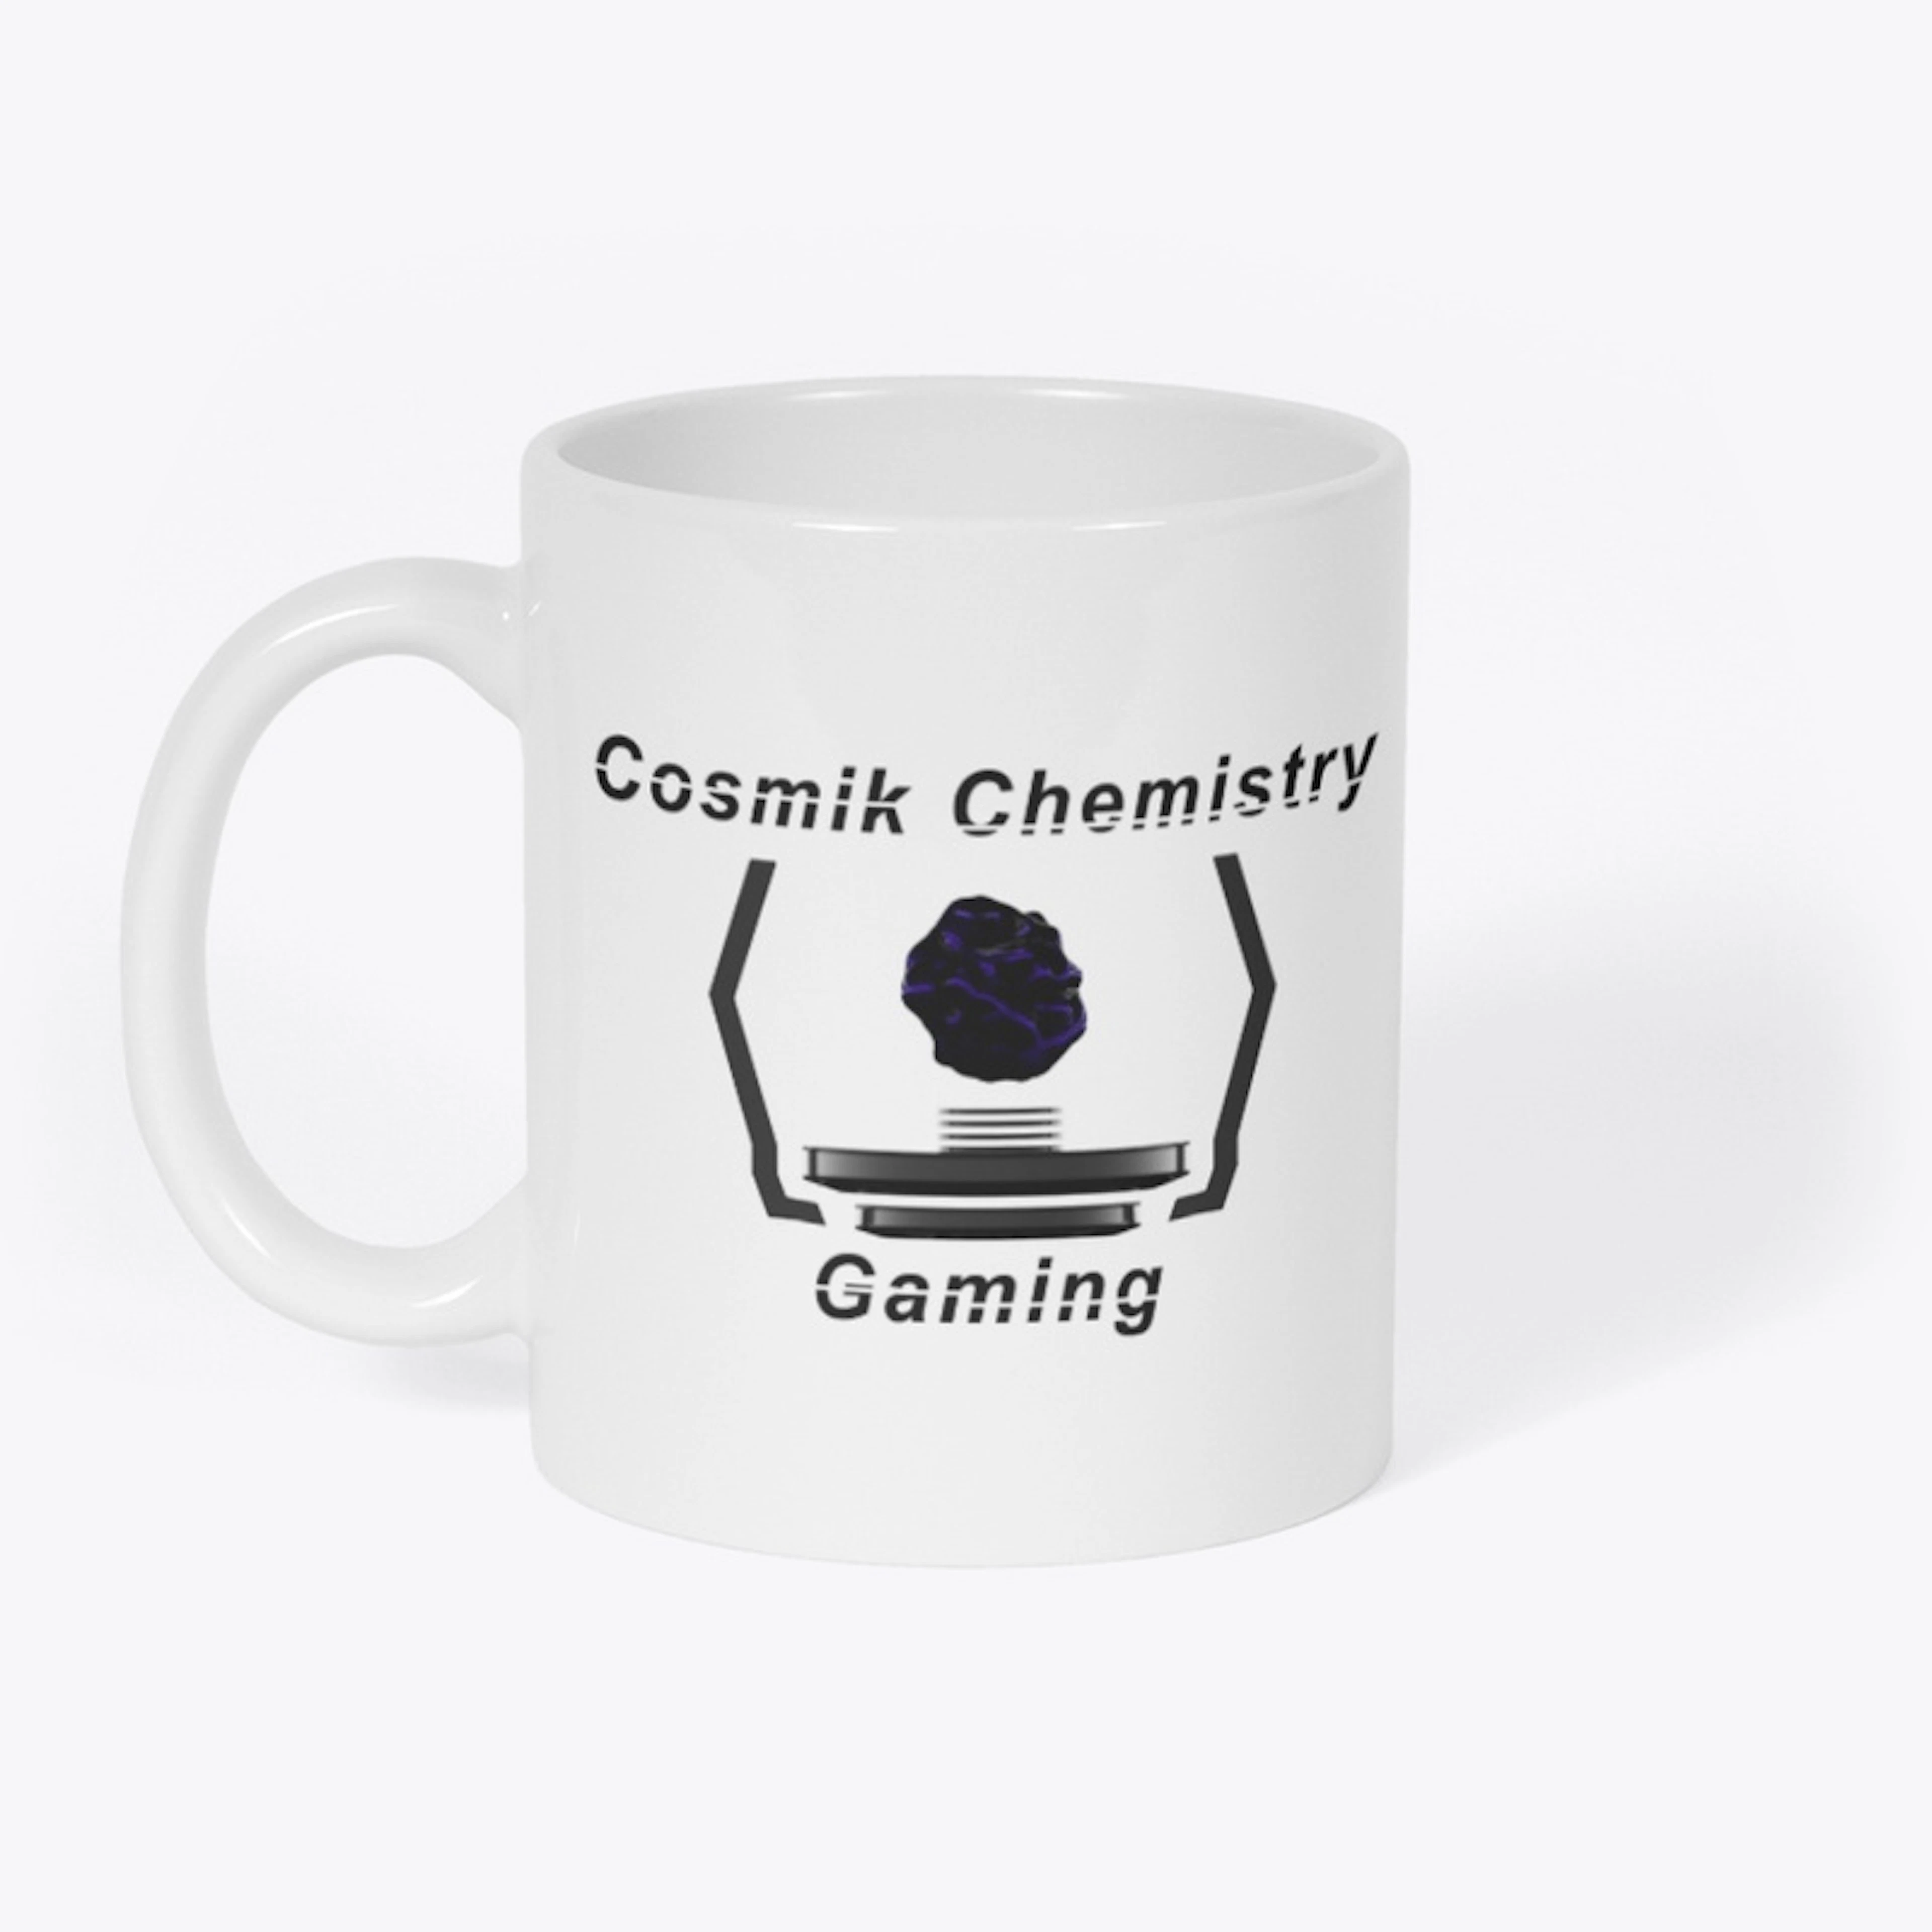 Cosmik Chemistry Gaming Mug